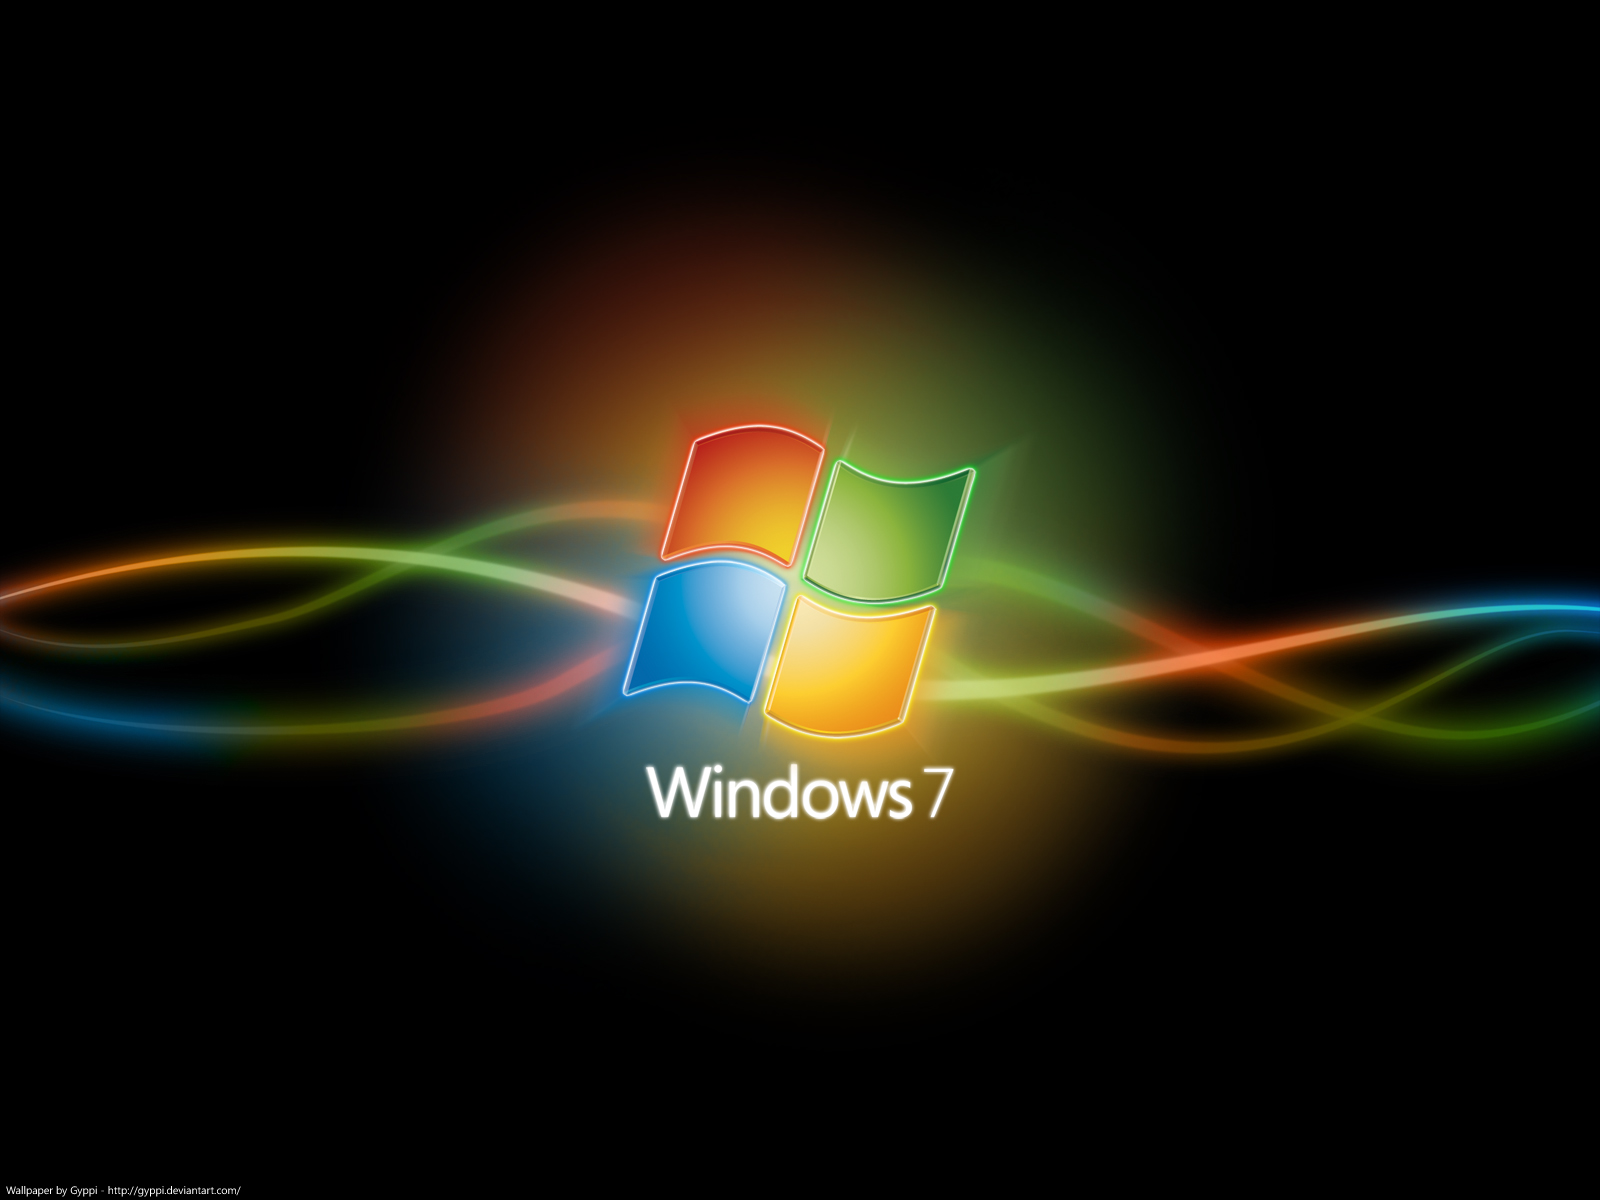 Windows 7 wallpaper 8 wallpaper